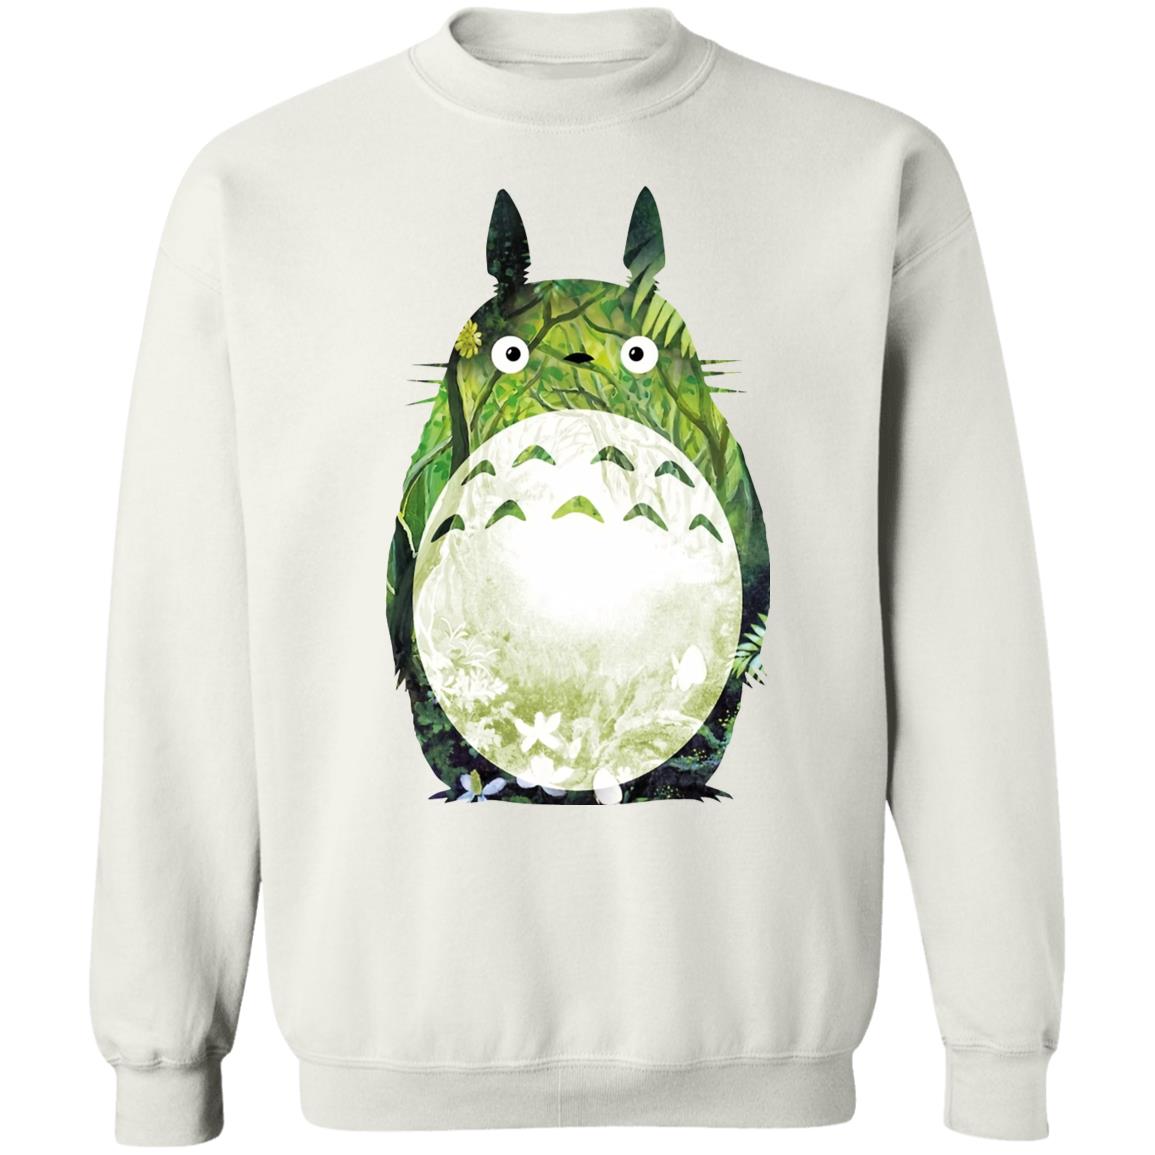 The Green Totoro Sweatshirt